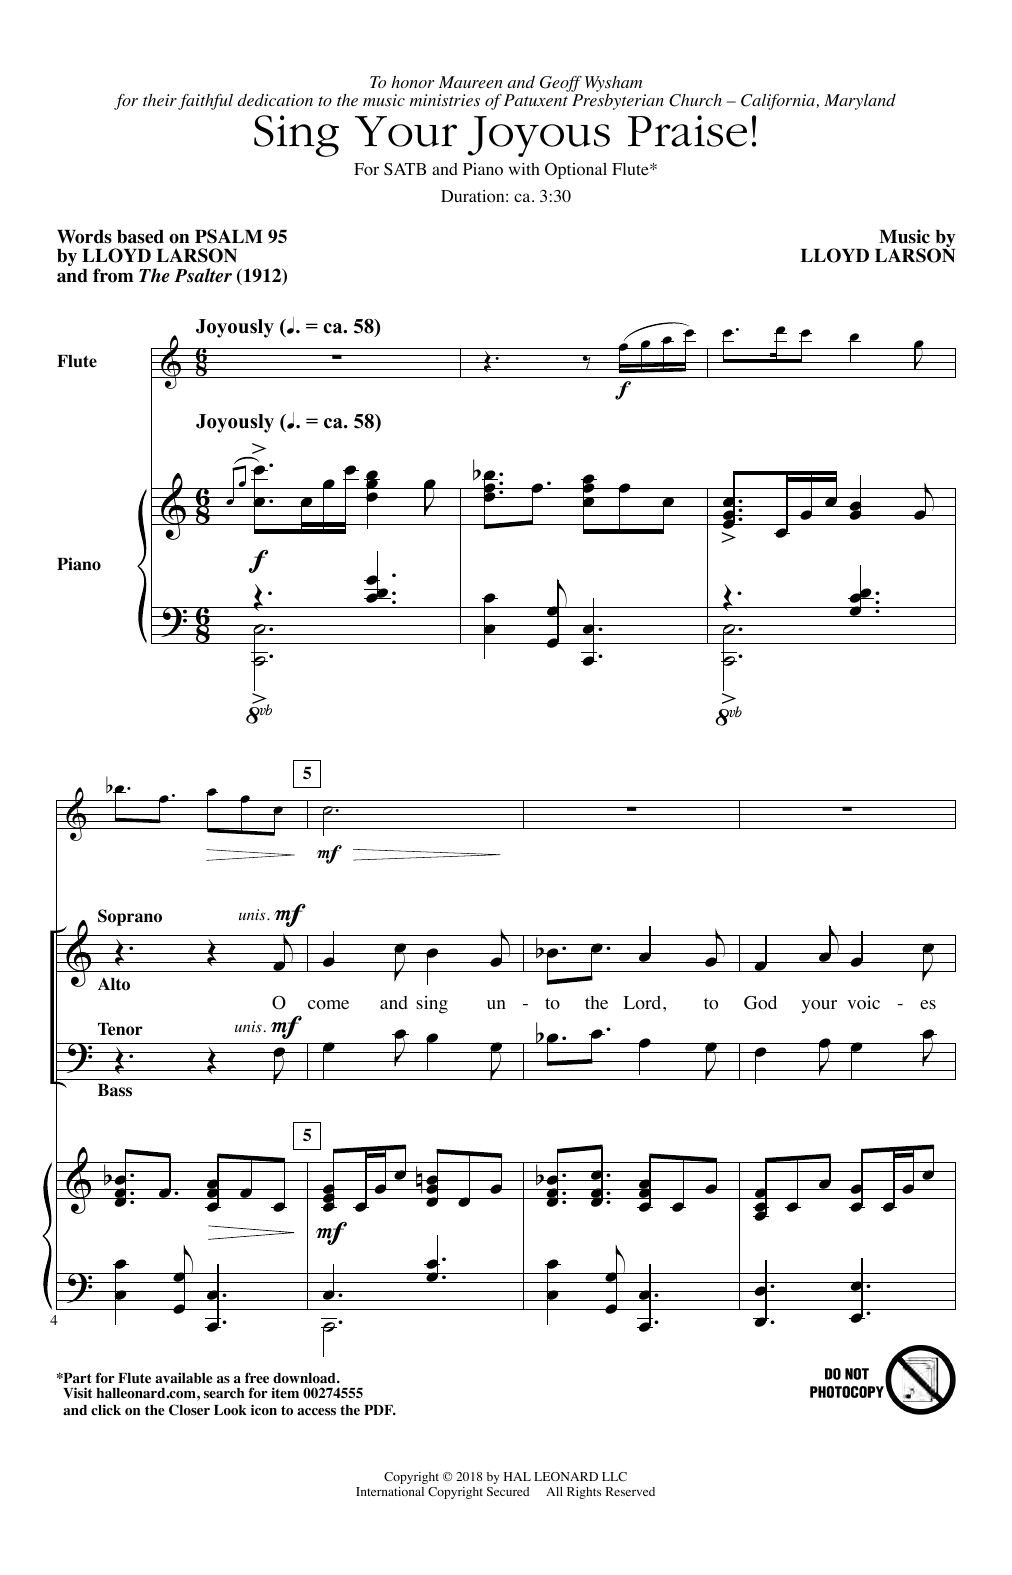 Lloyd Larson Sing Your Joyous Praise! sheet music notes and chords arranged for SATB Choir